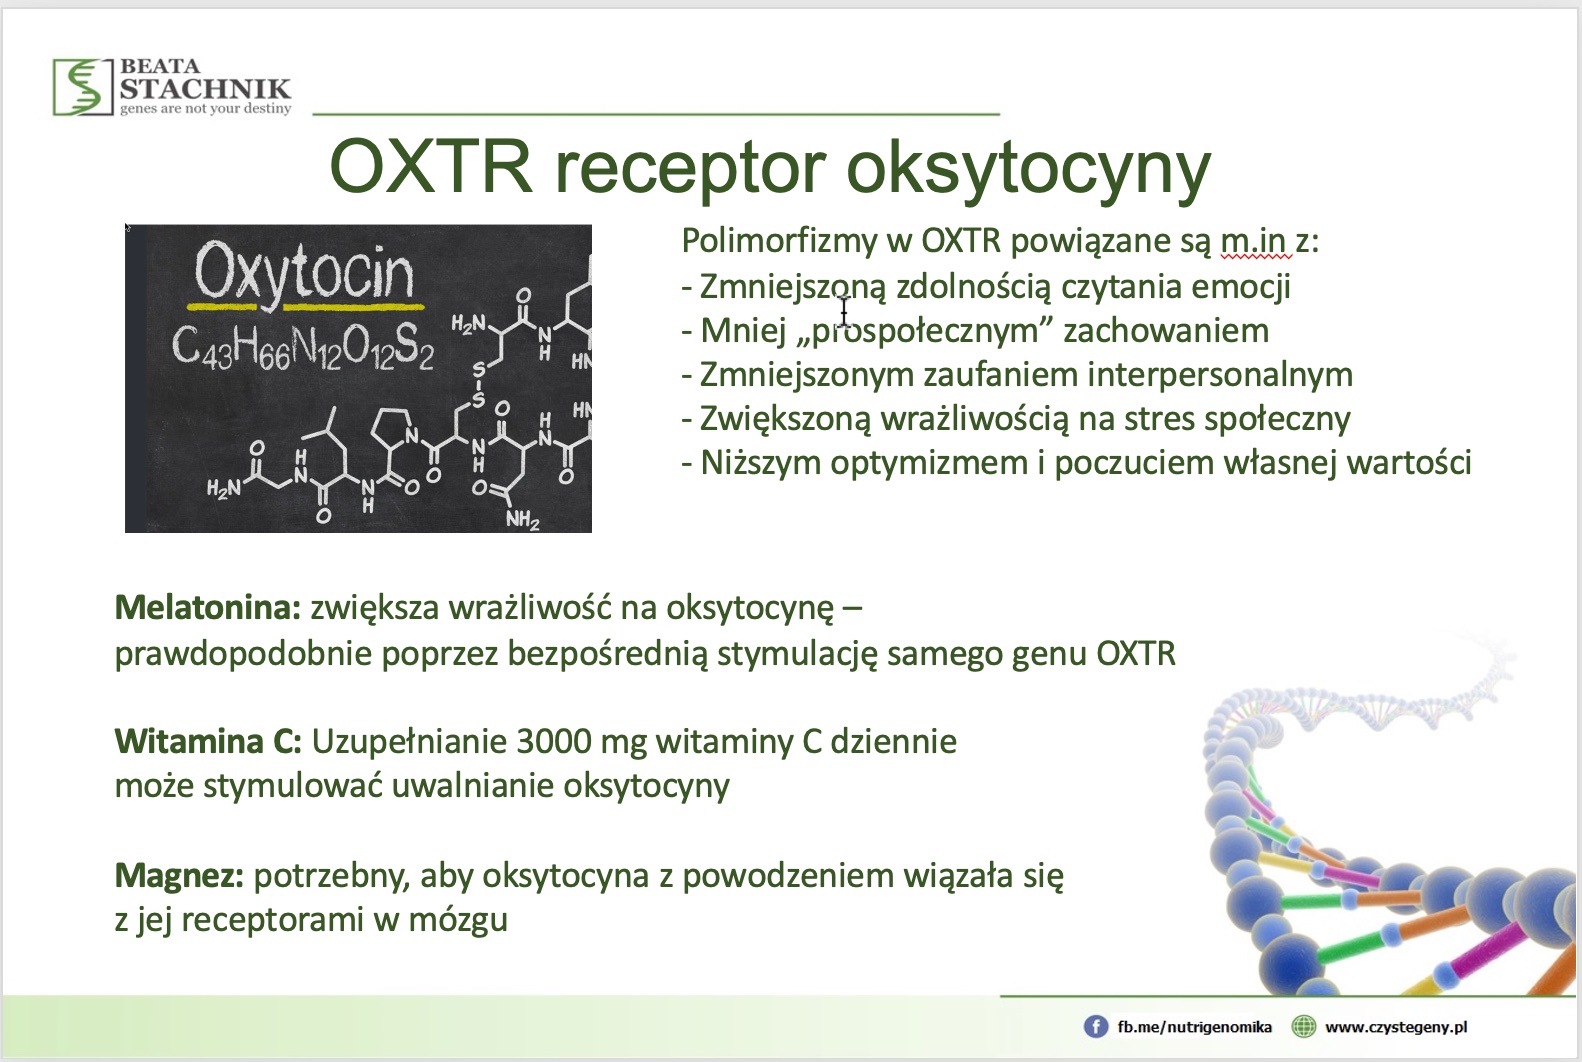 OXTR - receptor oksytocyny